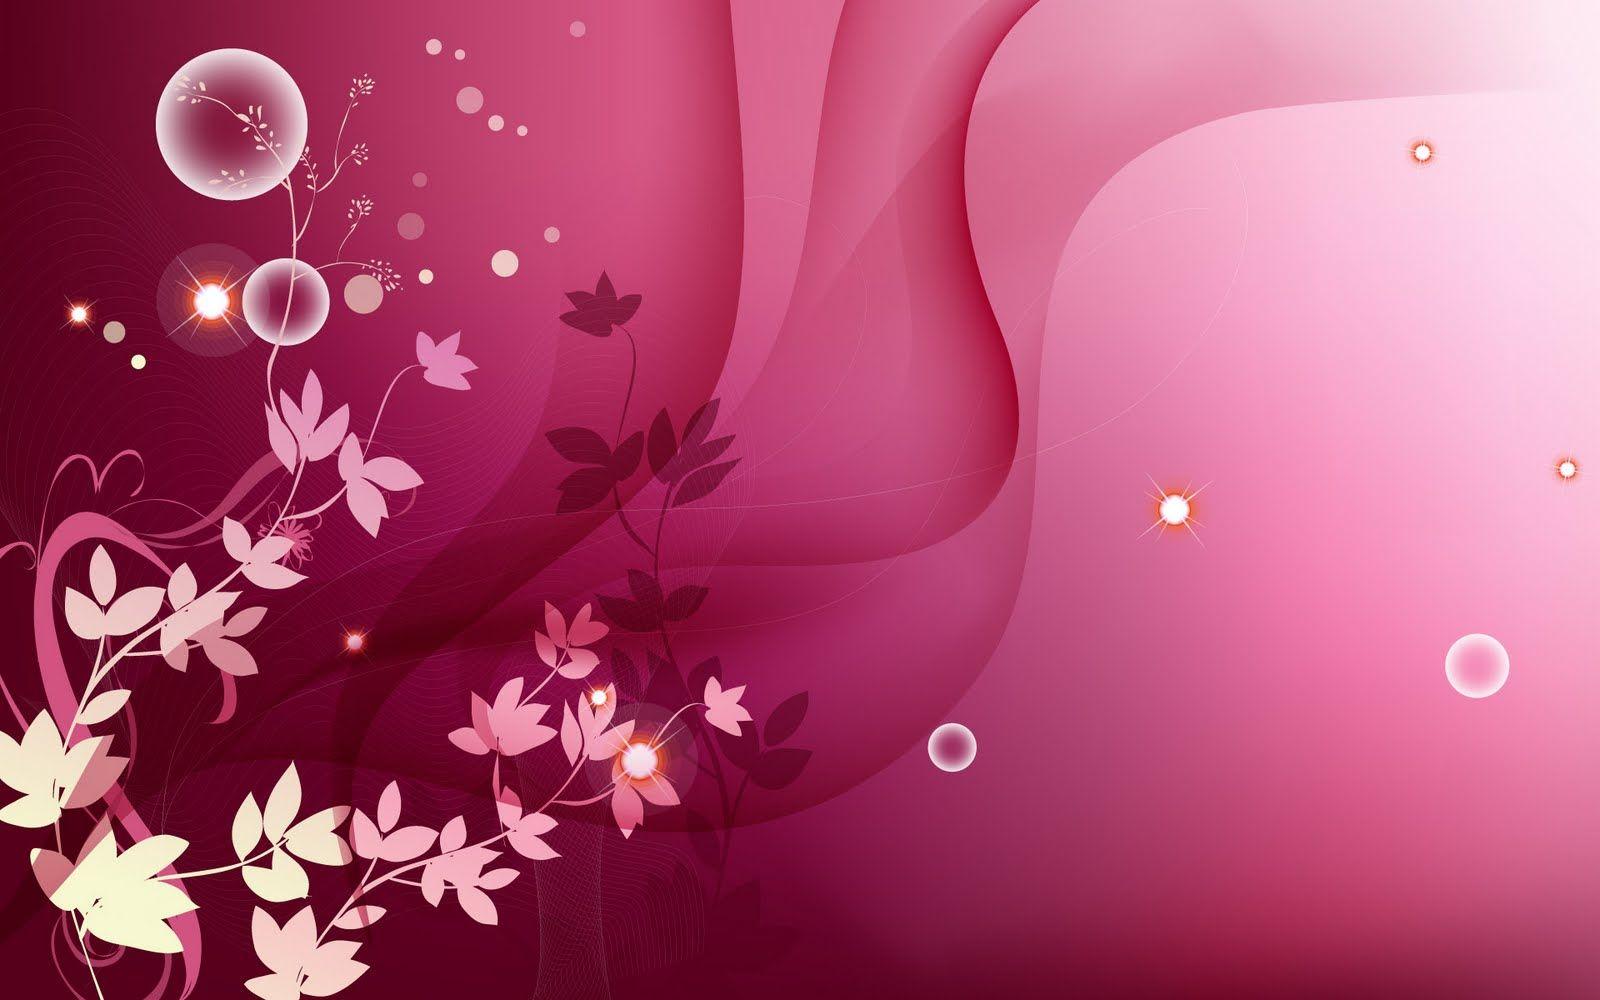 Pink wallpaper for desktop. The Free Image